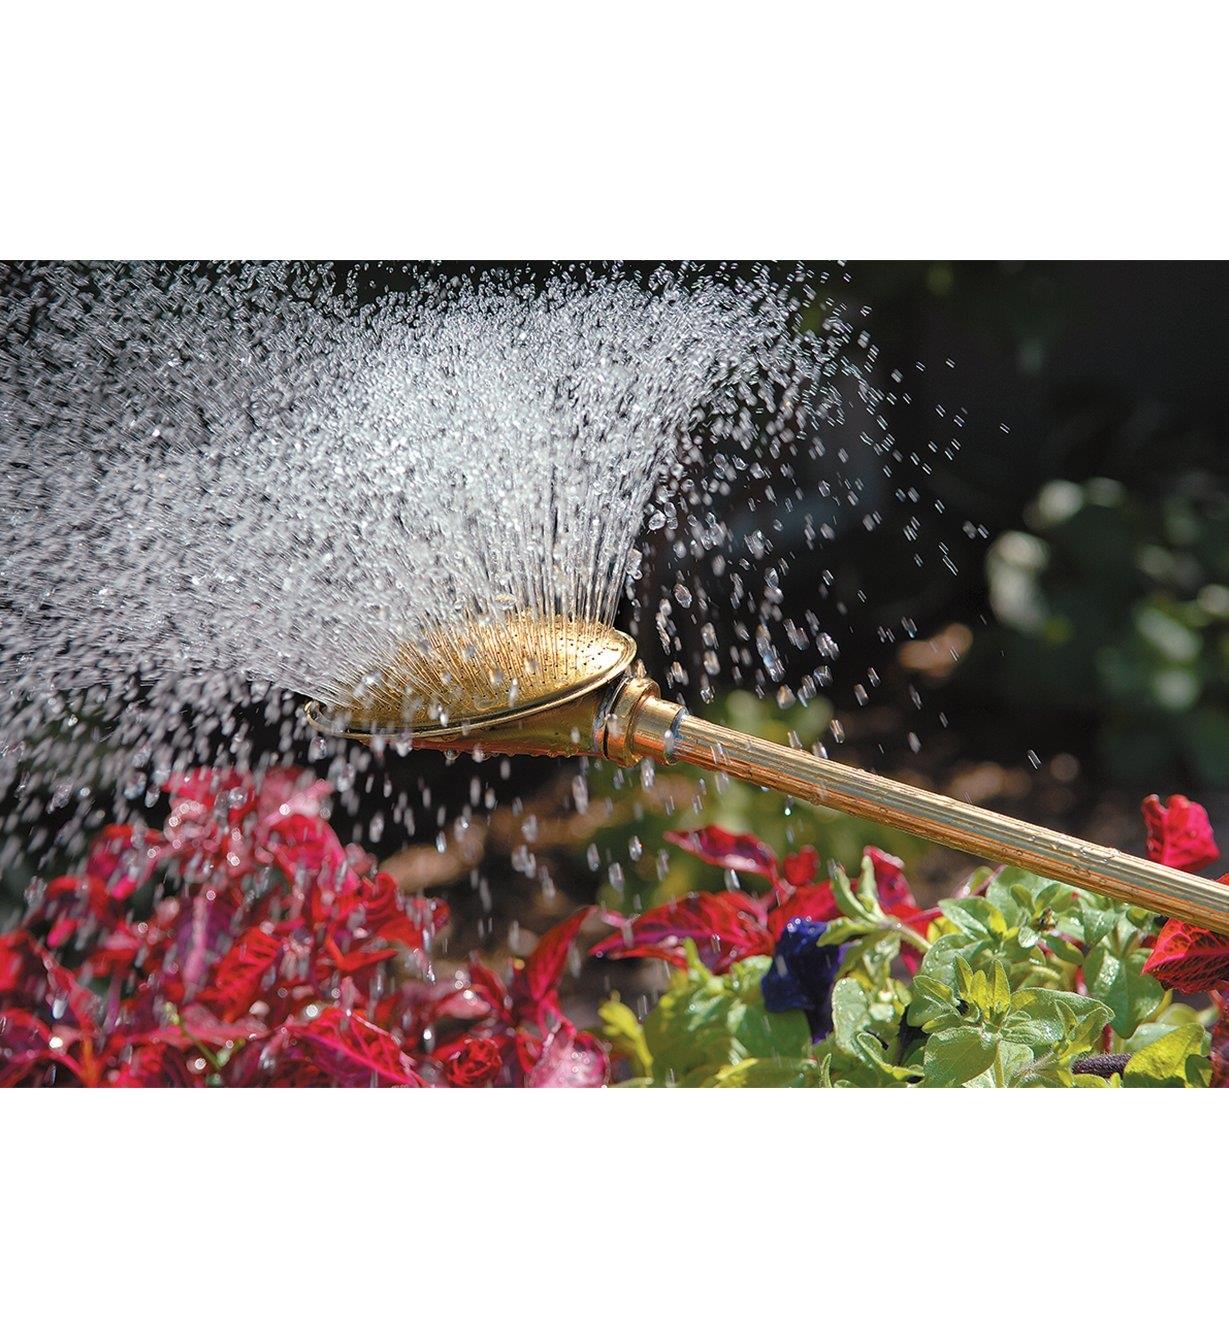 Haws Brass Water Wand watering flowers outdoors